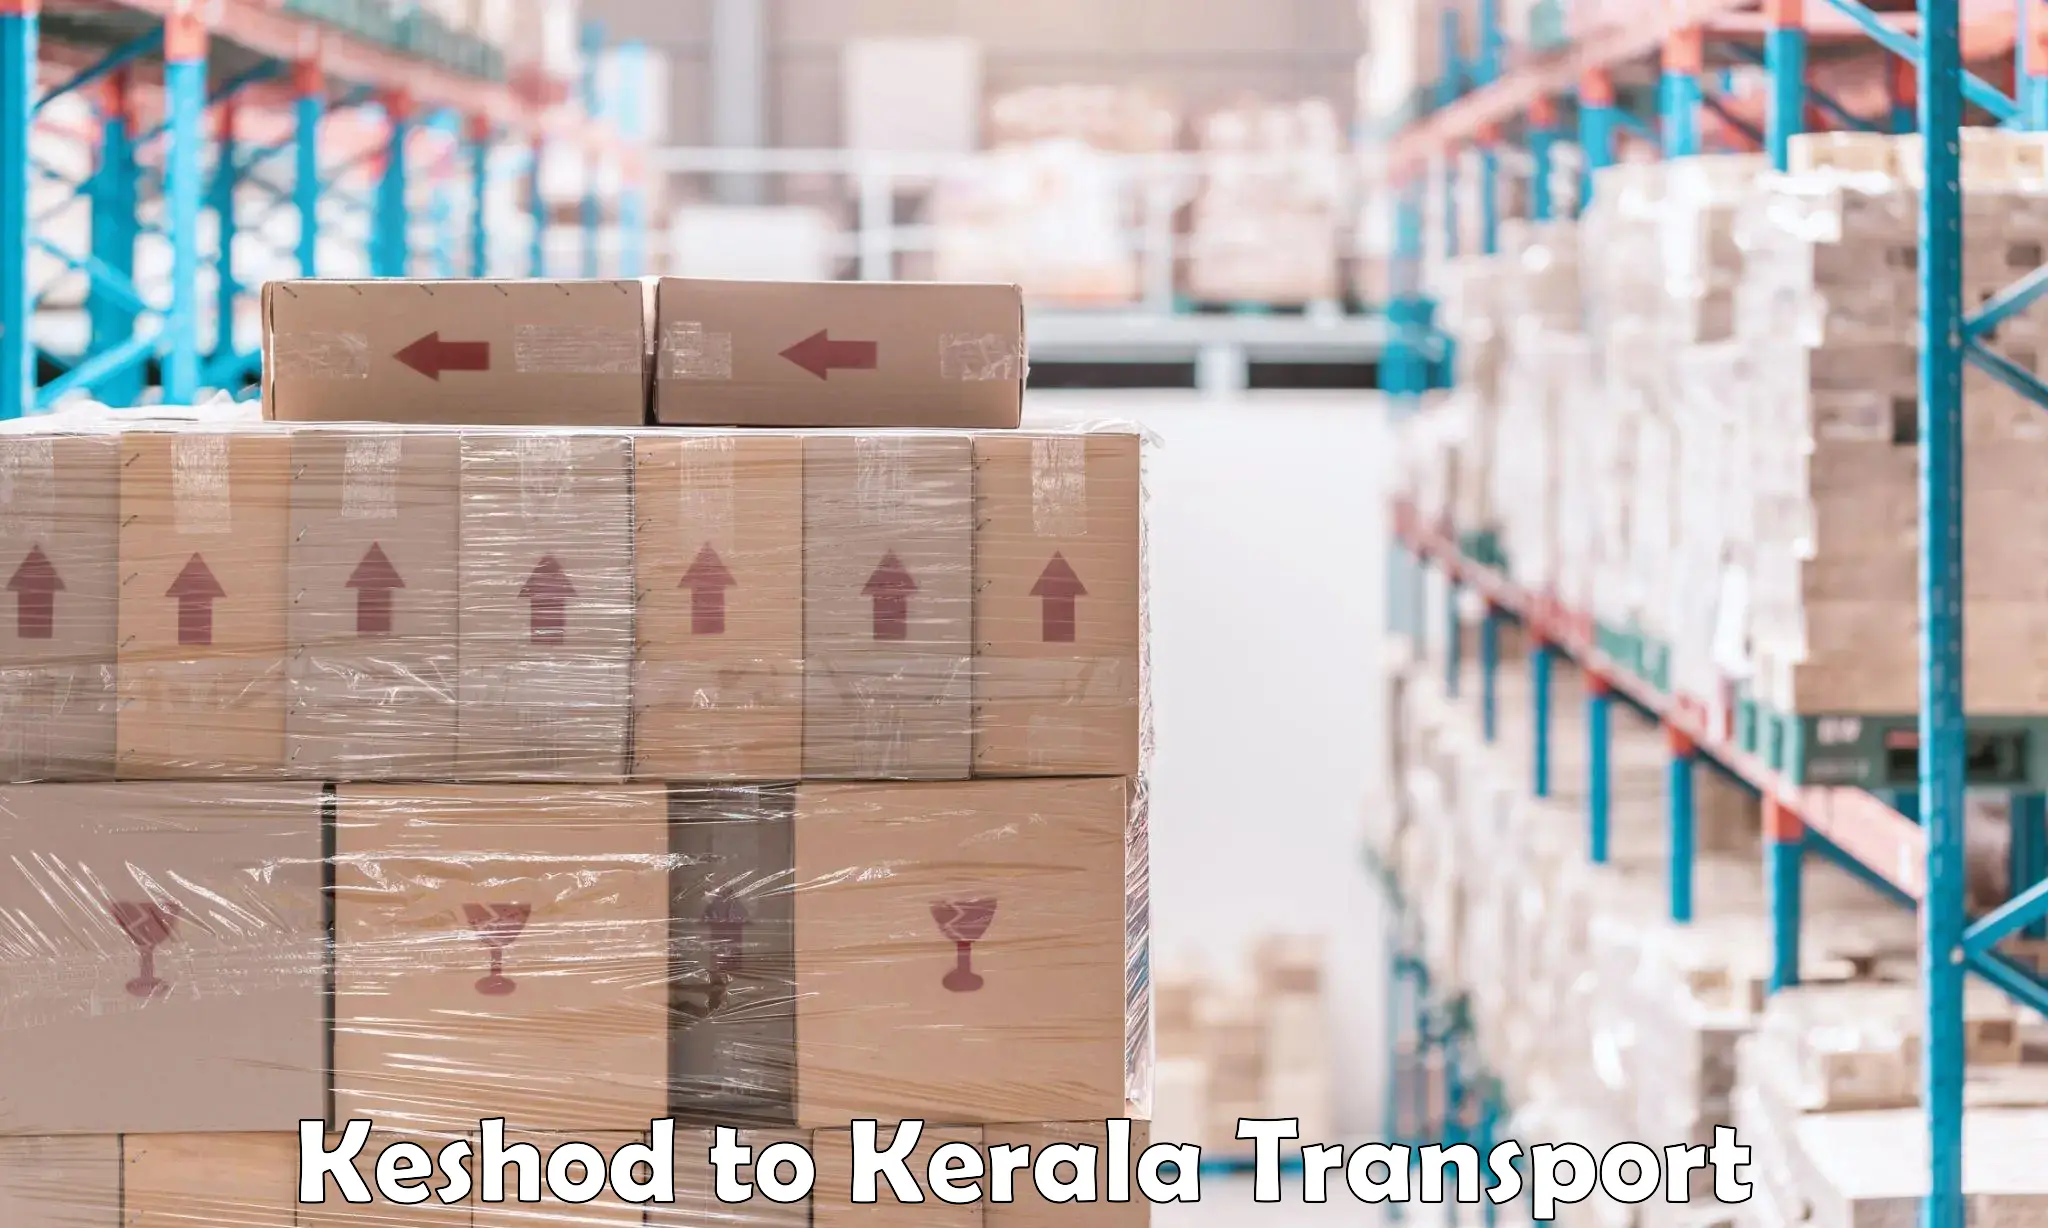 Transport in sharing Keshod to Kattappana